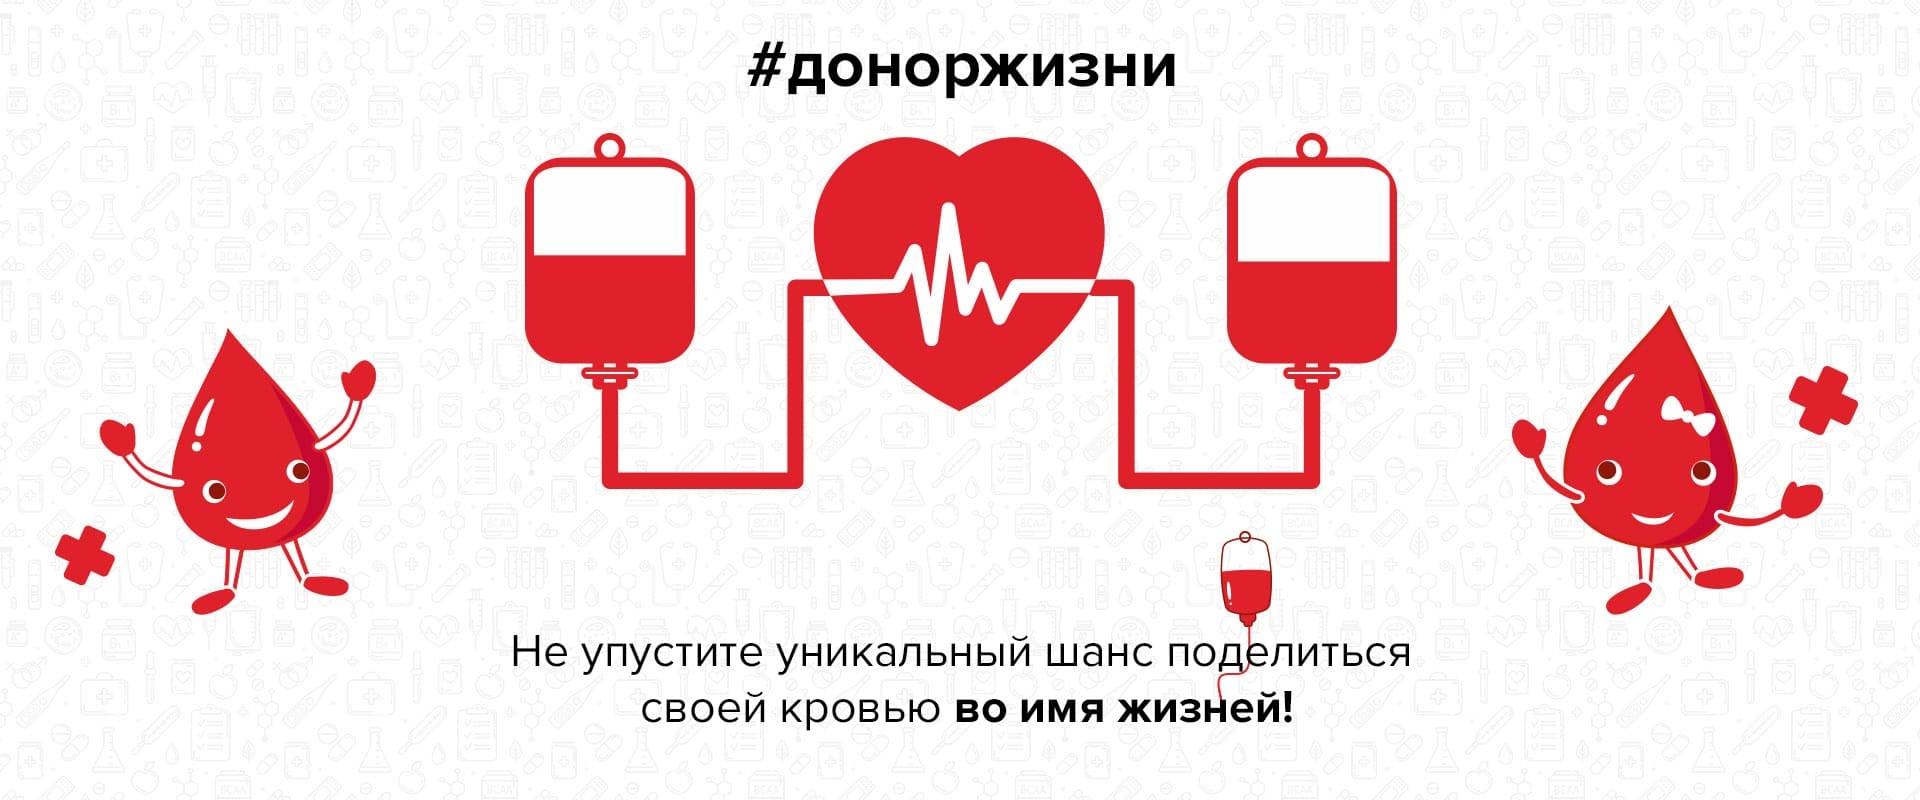 Полный донор. Донорство картинки. Донорство крови плакат. Донорство рисунок. Донорство крови рисунок.